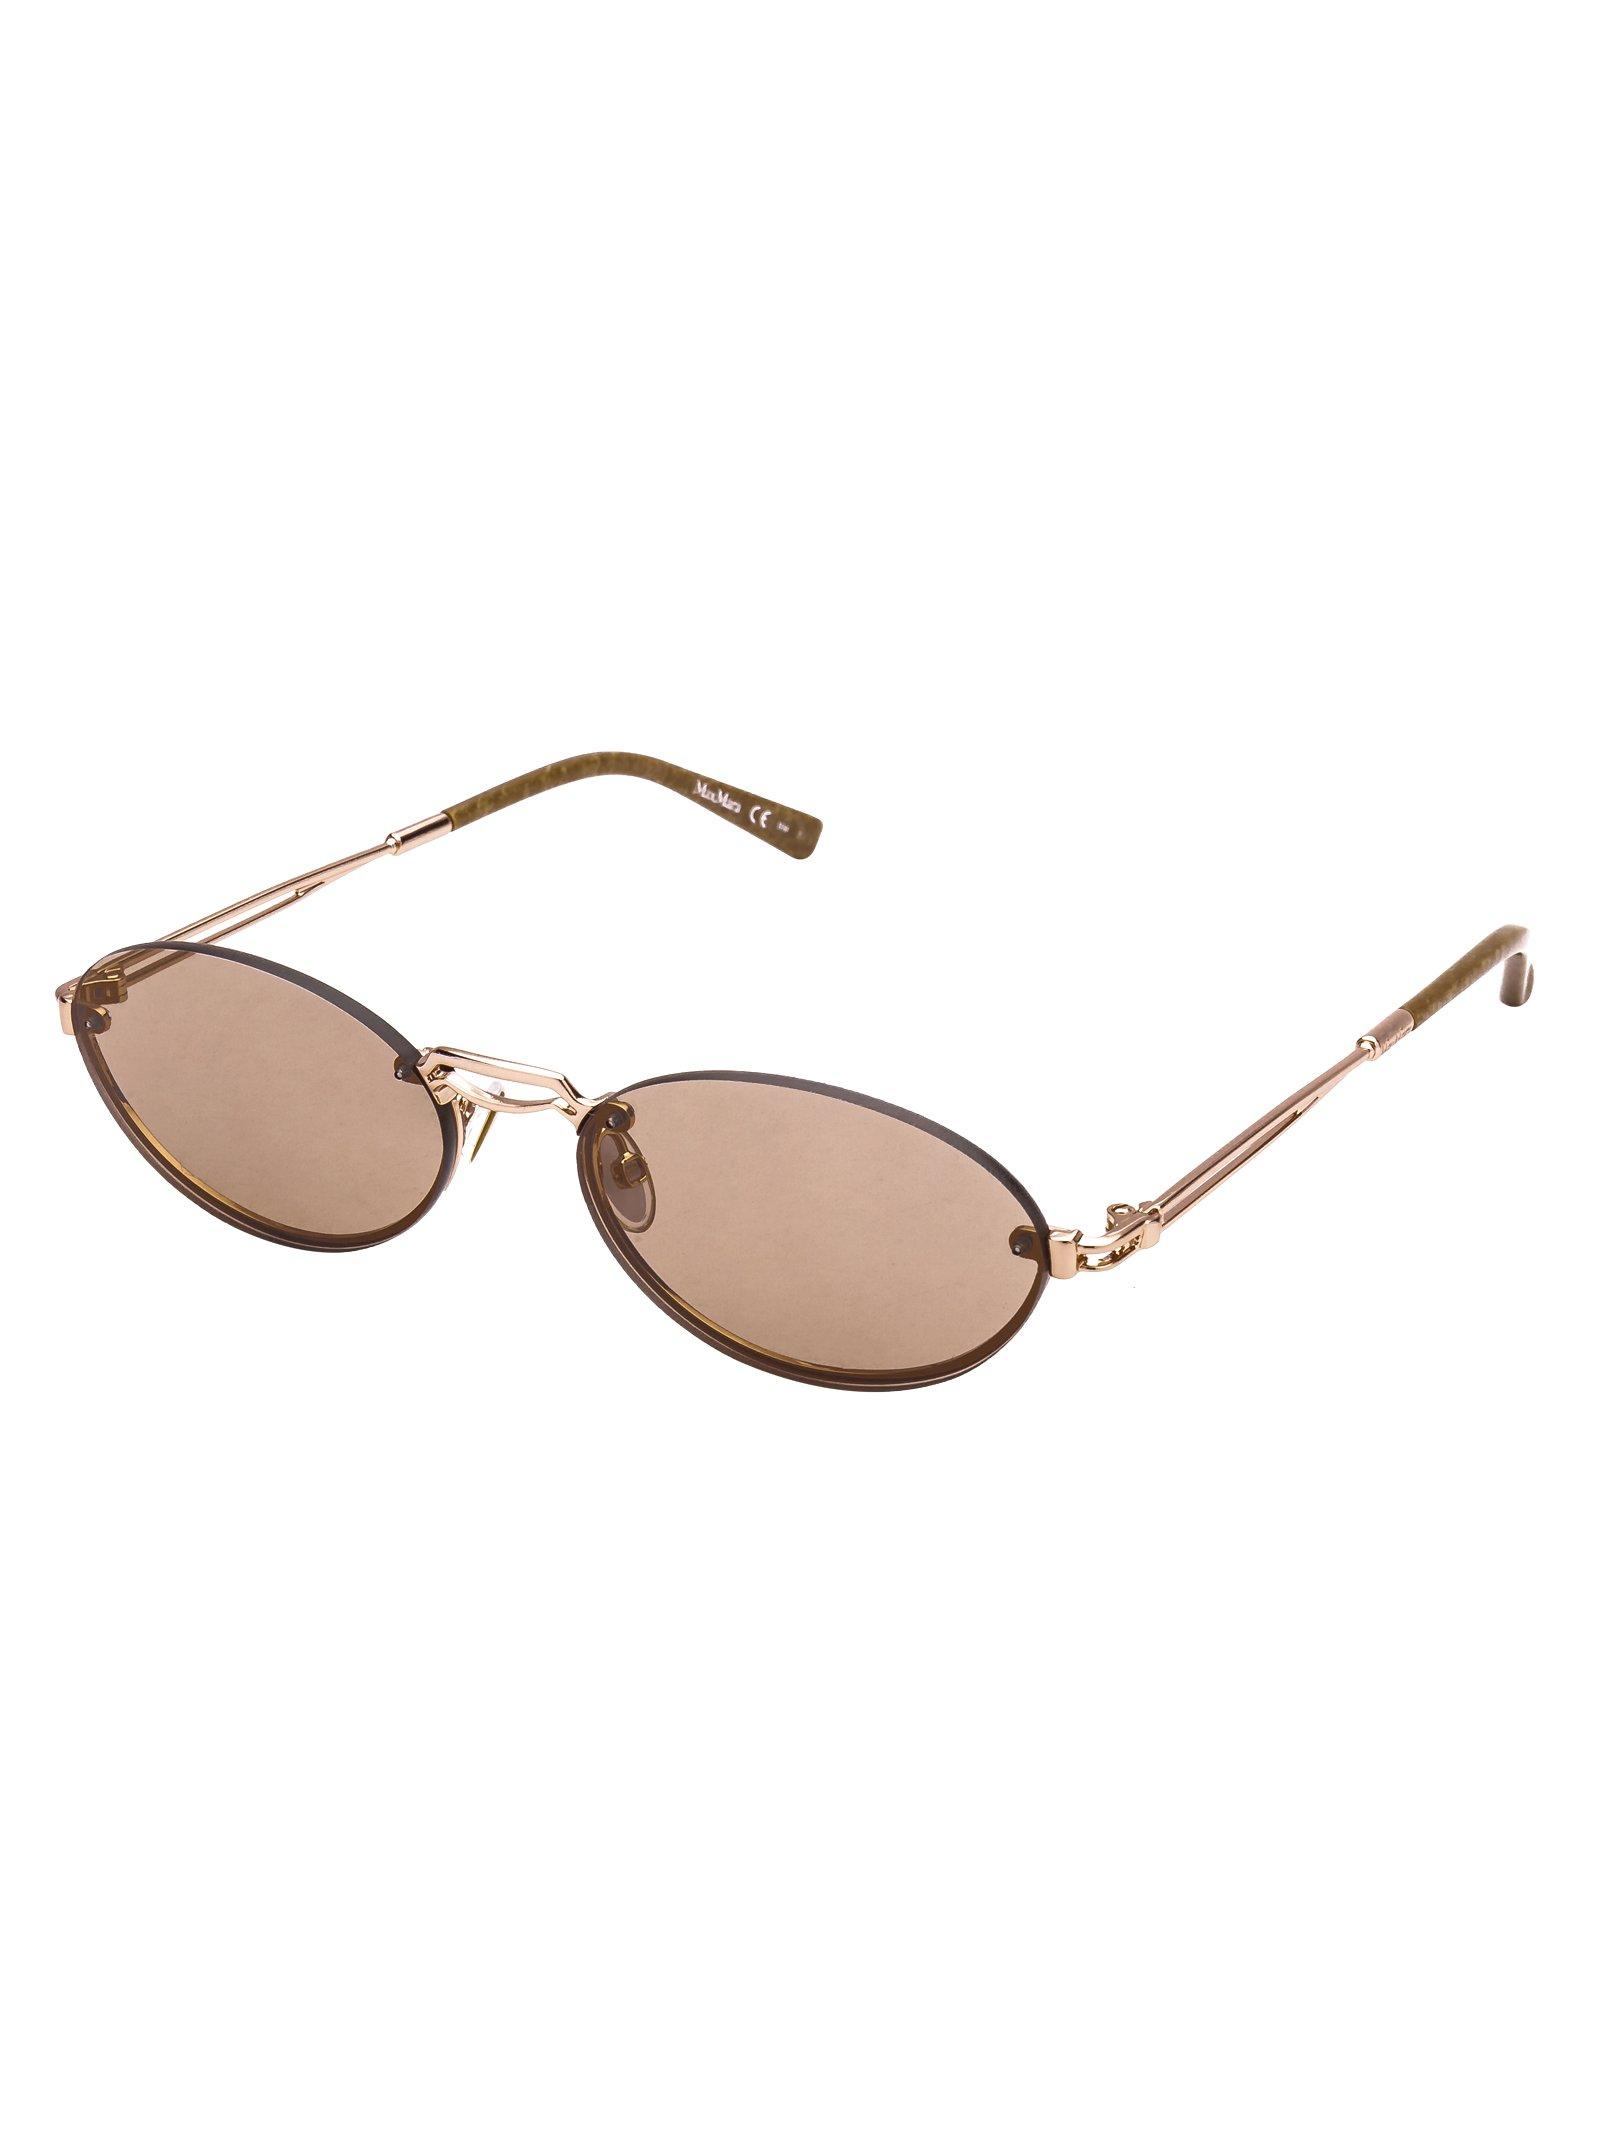 Max Mara Bridge Ii Oval Shaped Sunglasses in Brown | Lyst